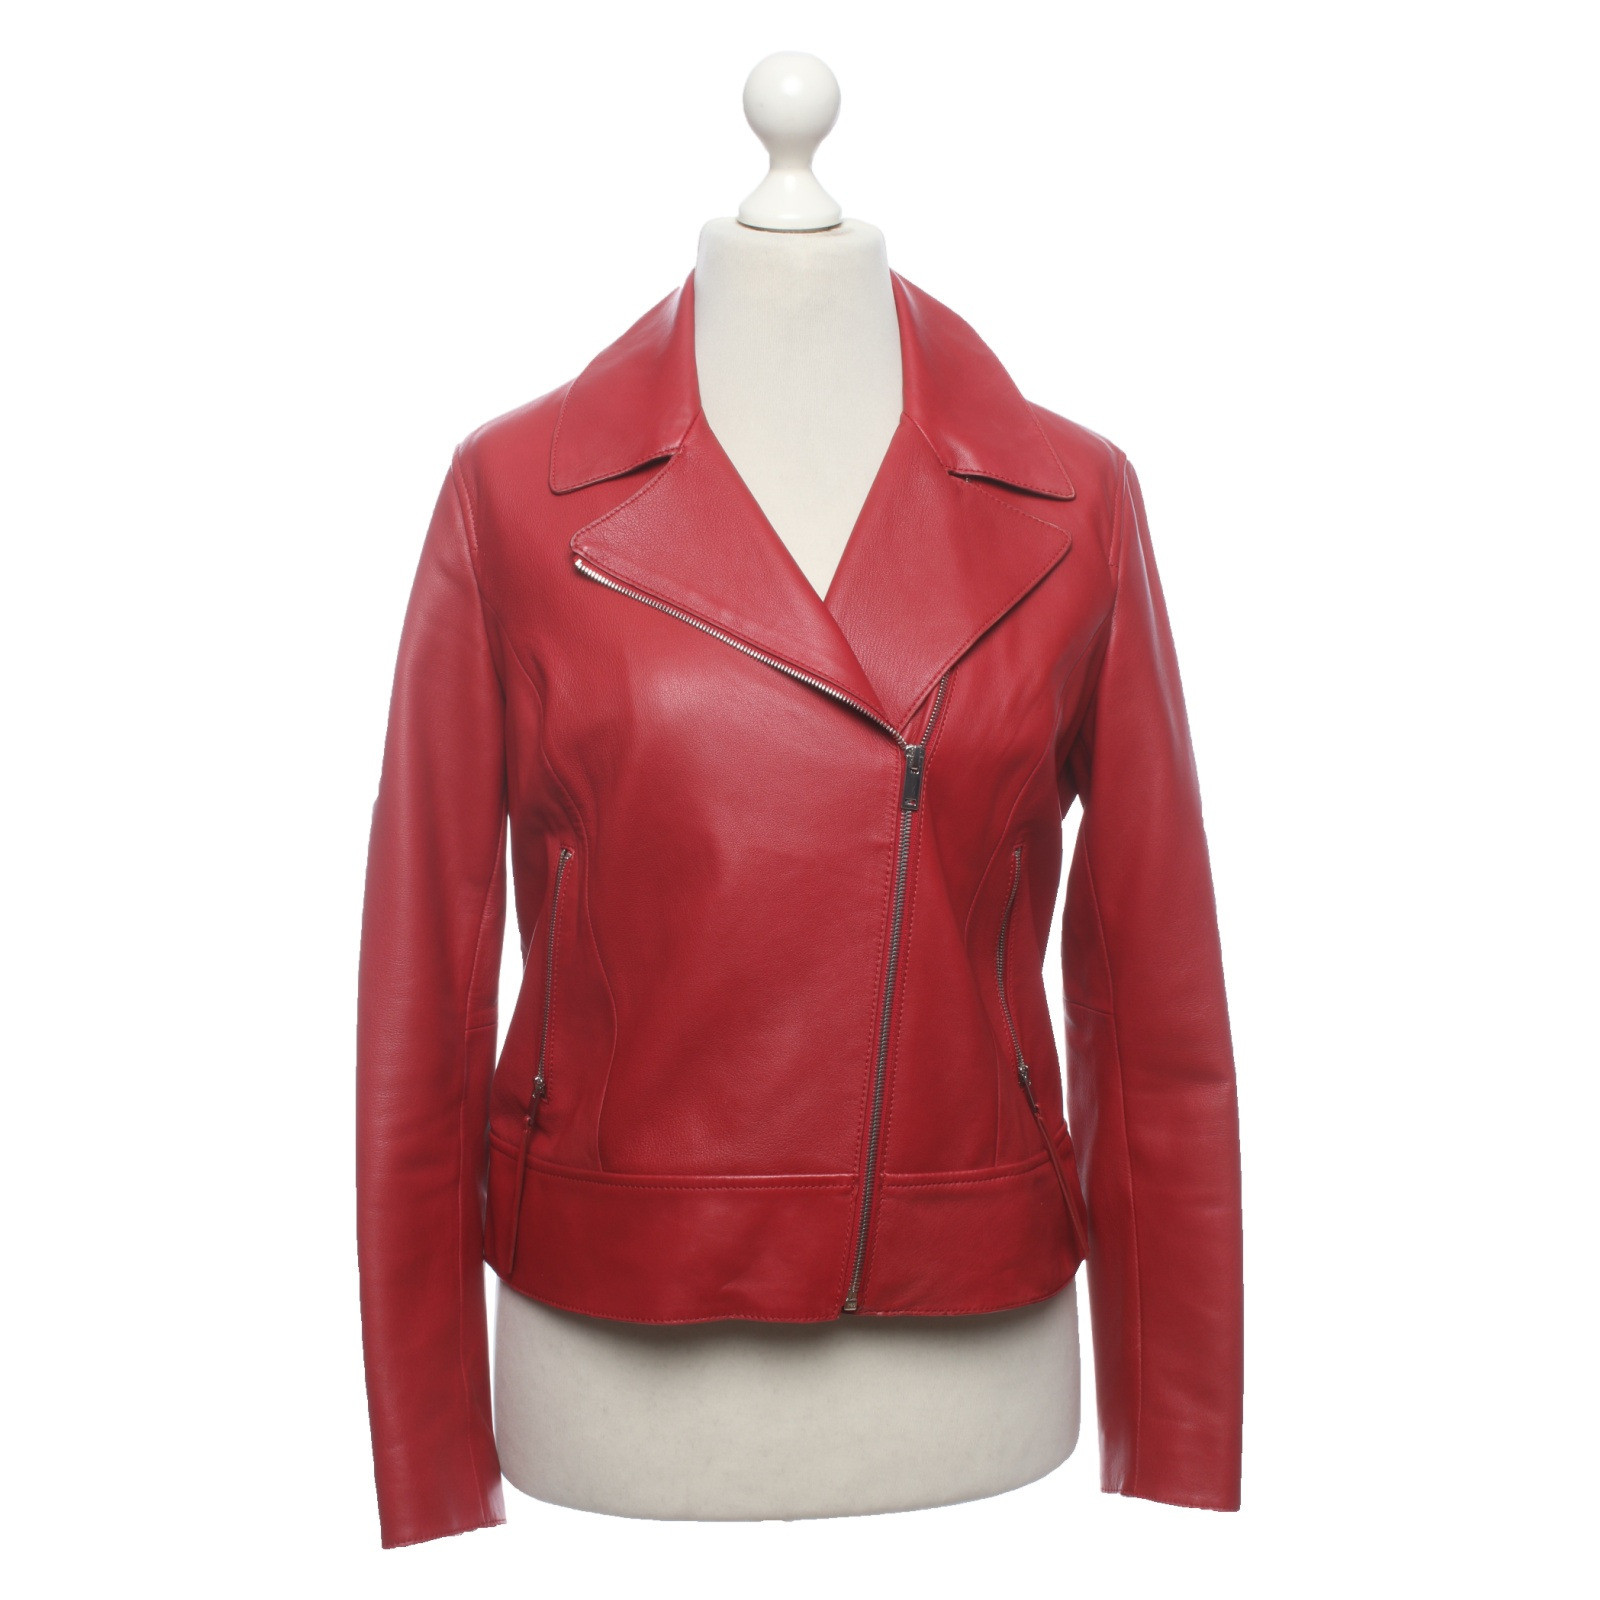 MASSIMO DUTTI Women's Jacke/Mantel aus Leder in Rot Size: L